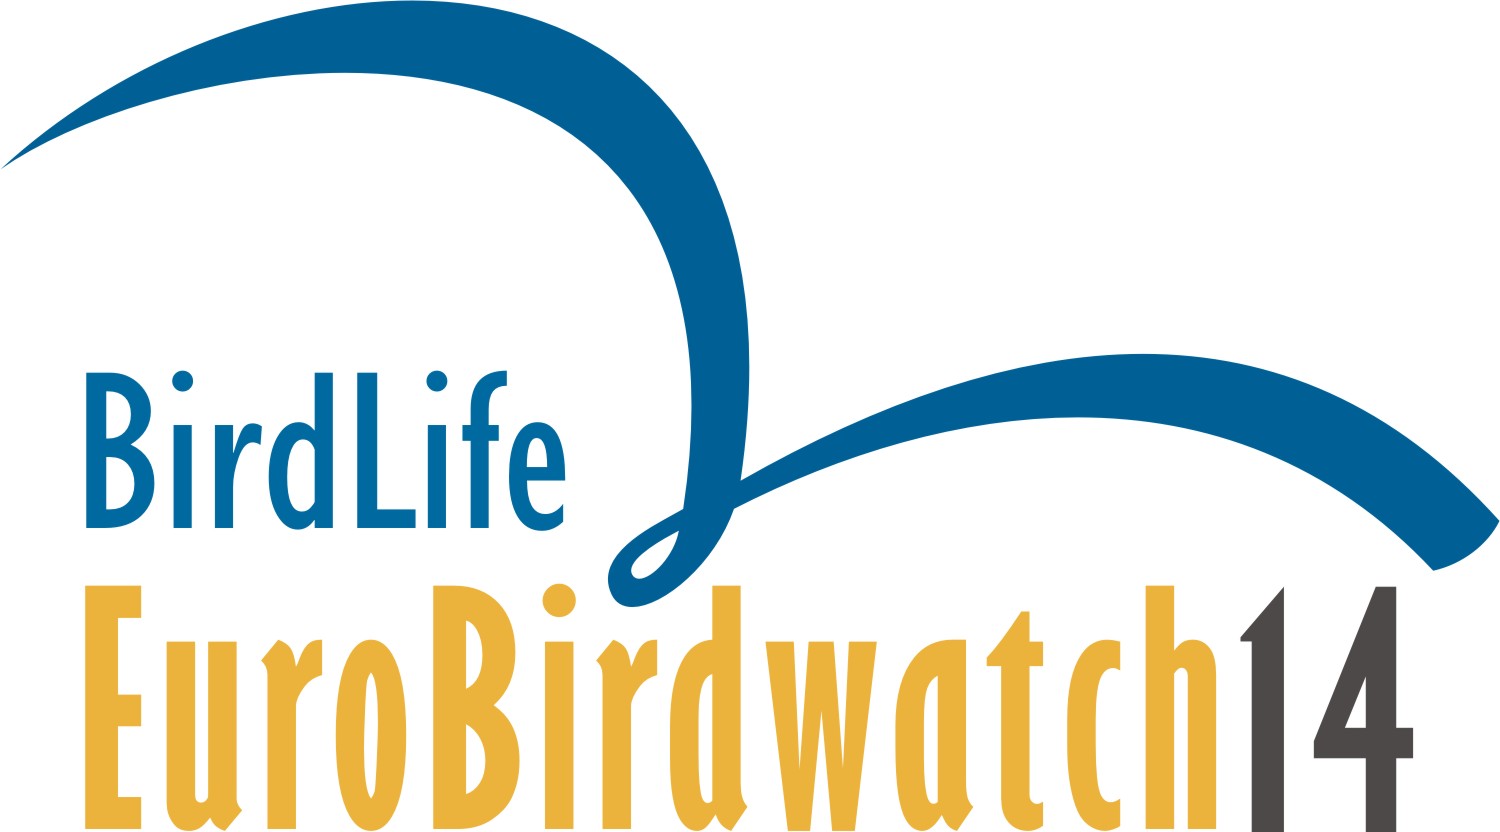 birdwatch 2014 